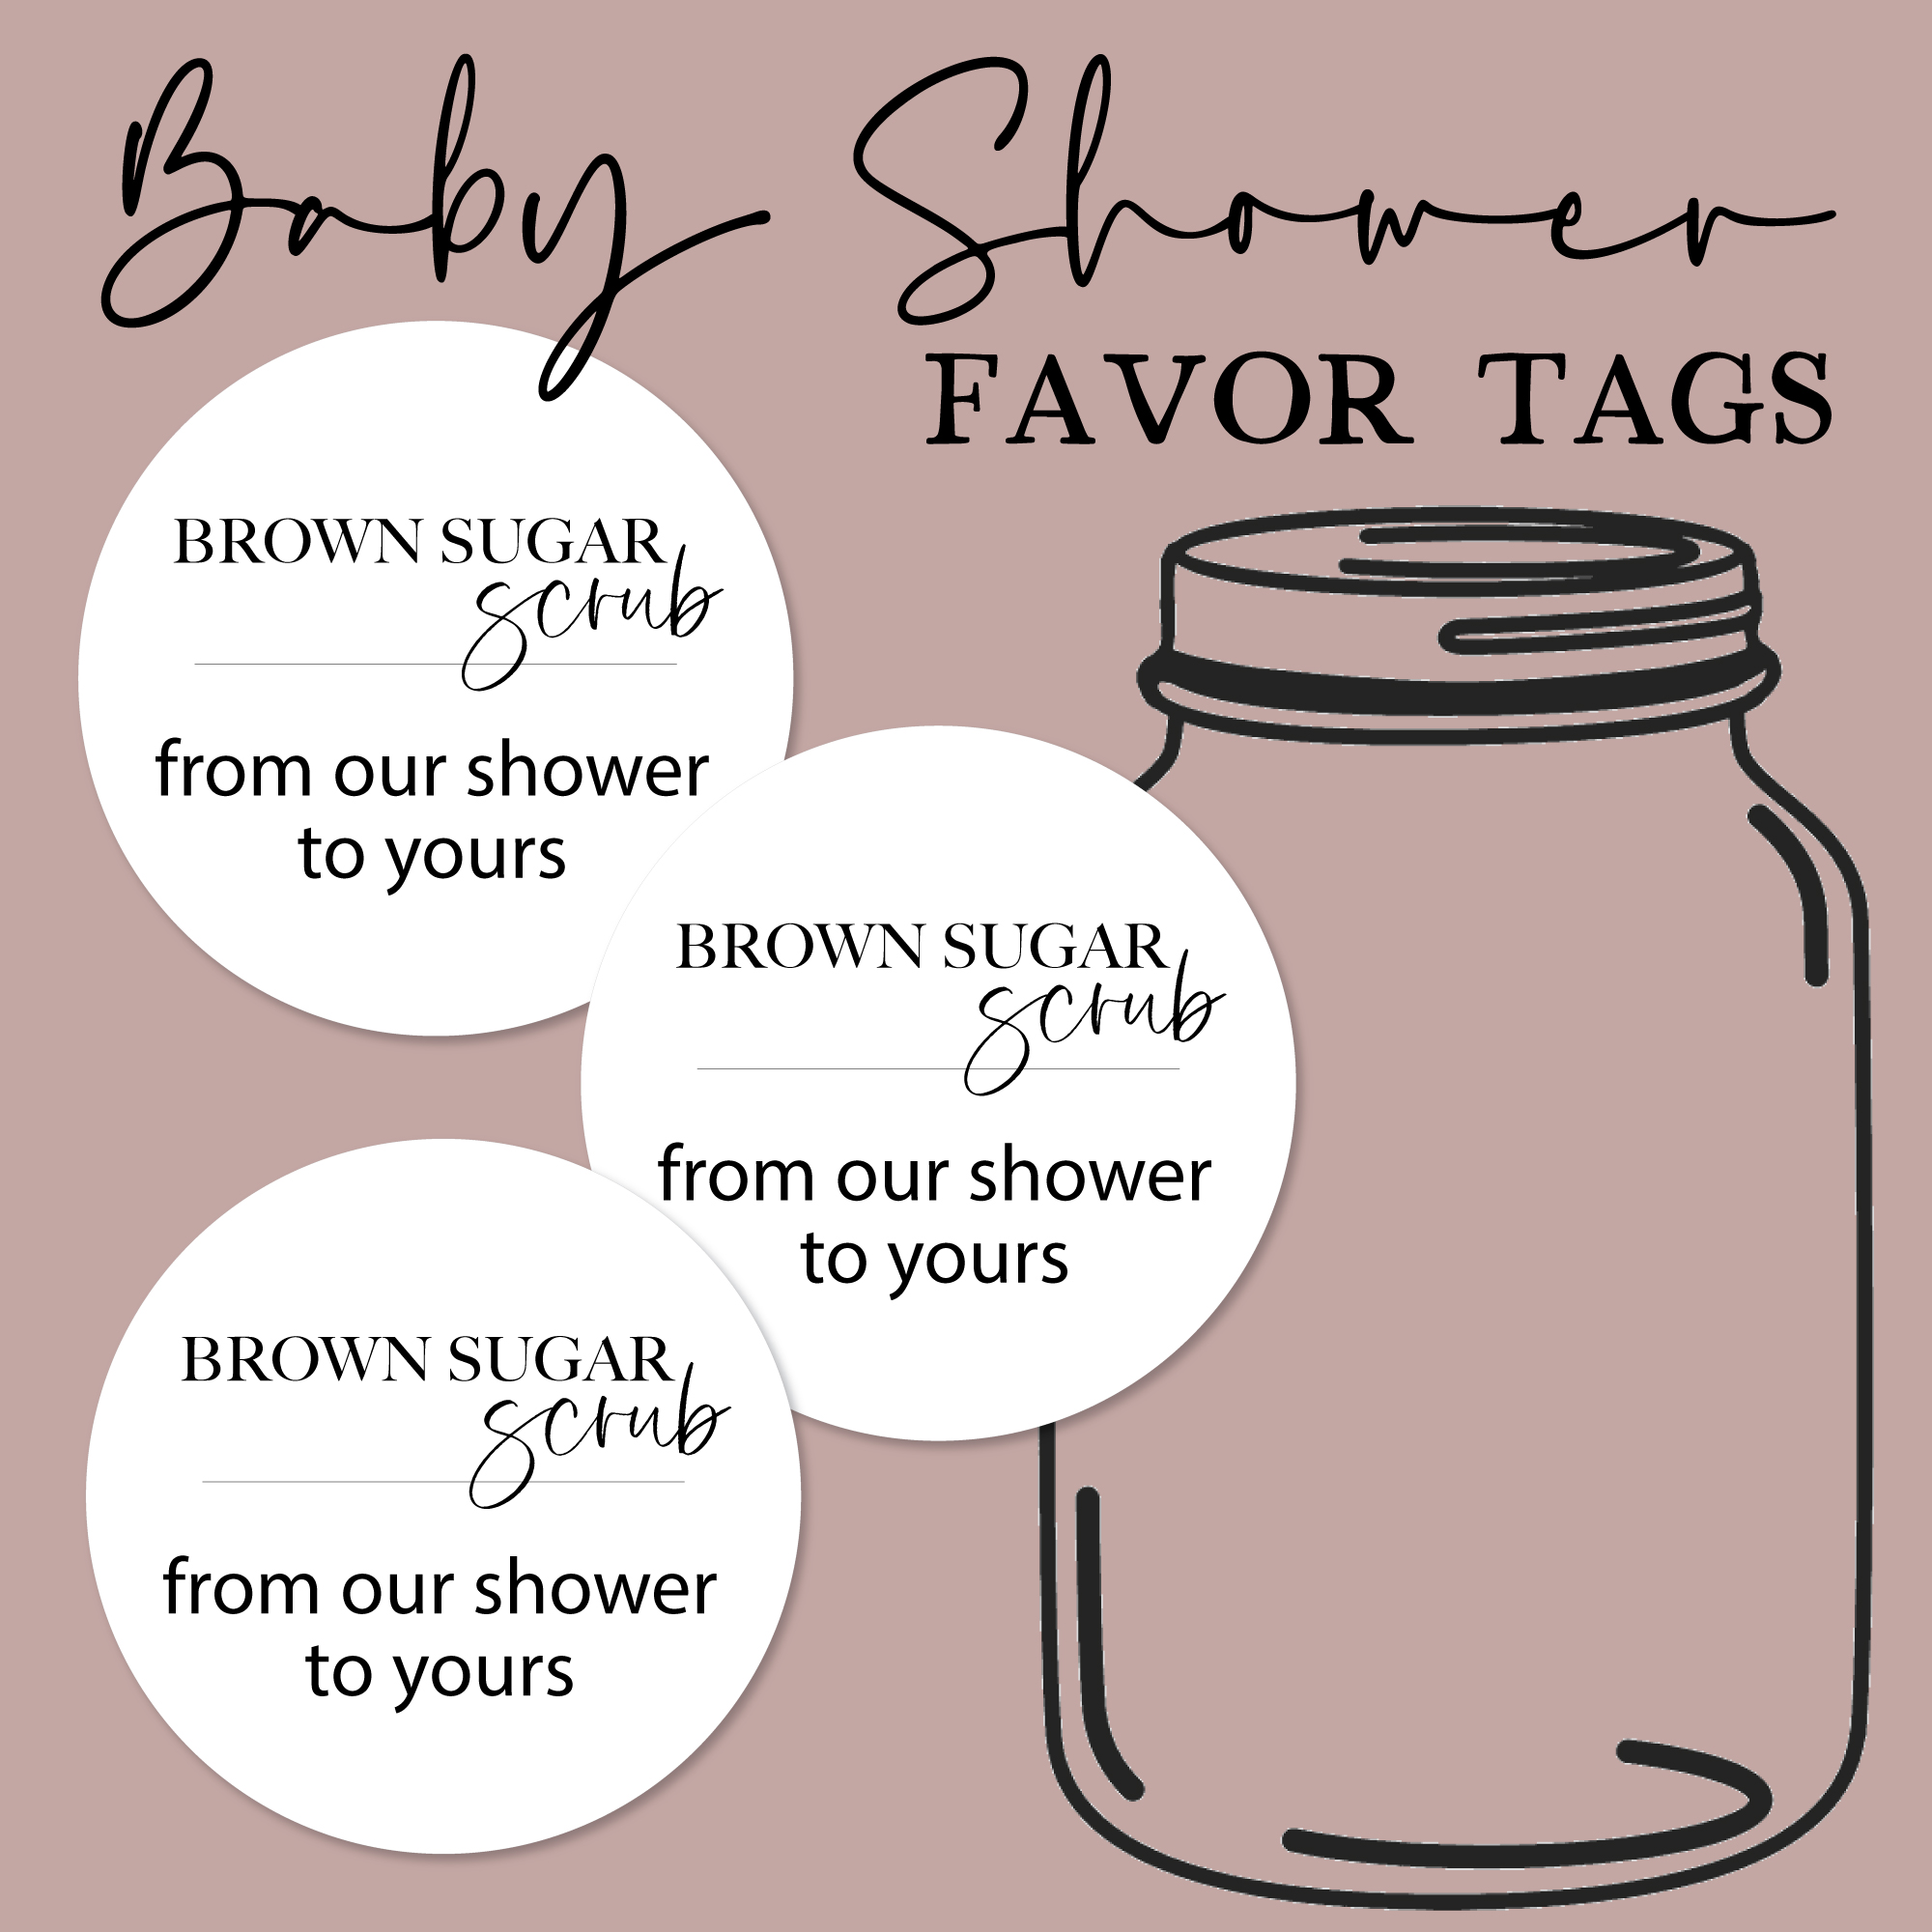 printable baby shower gift tag